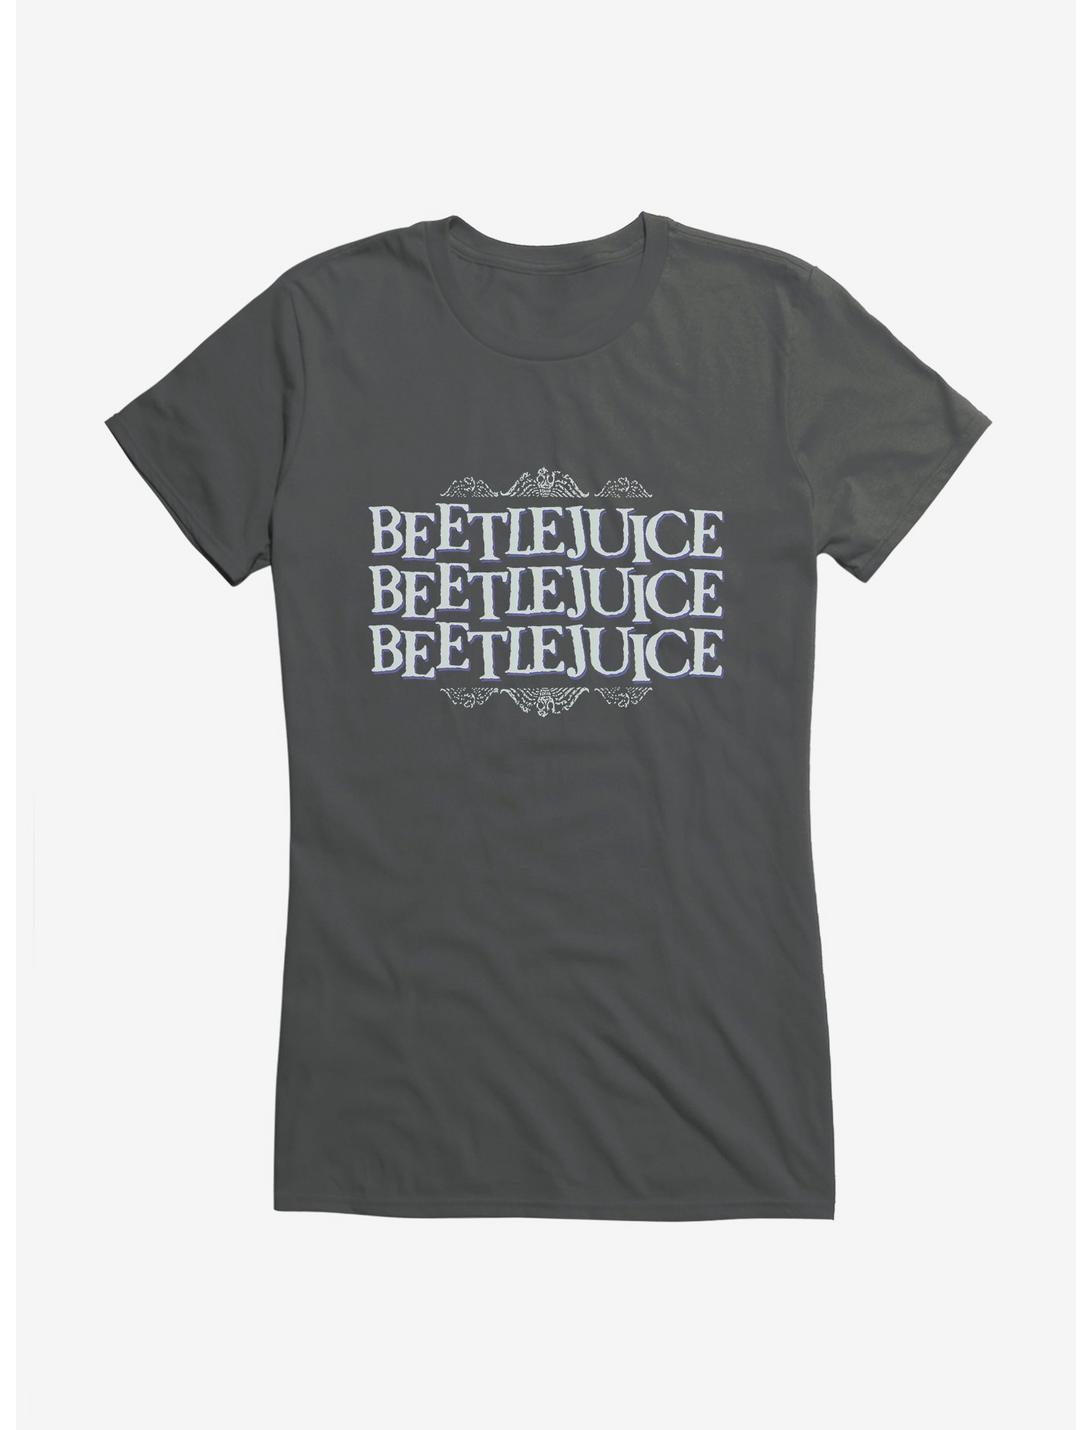 Beetlejuice Say It 3 Times! Girls T-Shirt, , hi-res